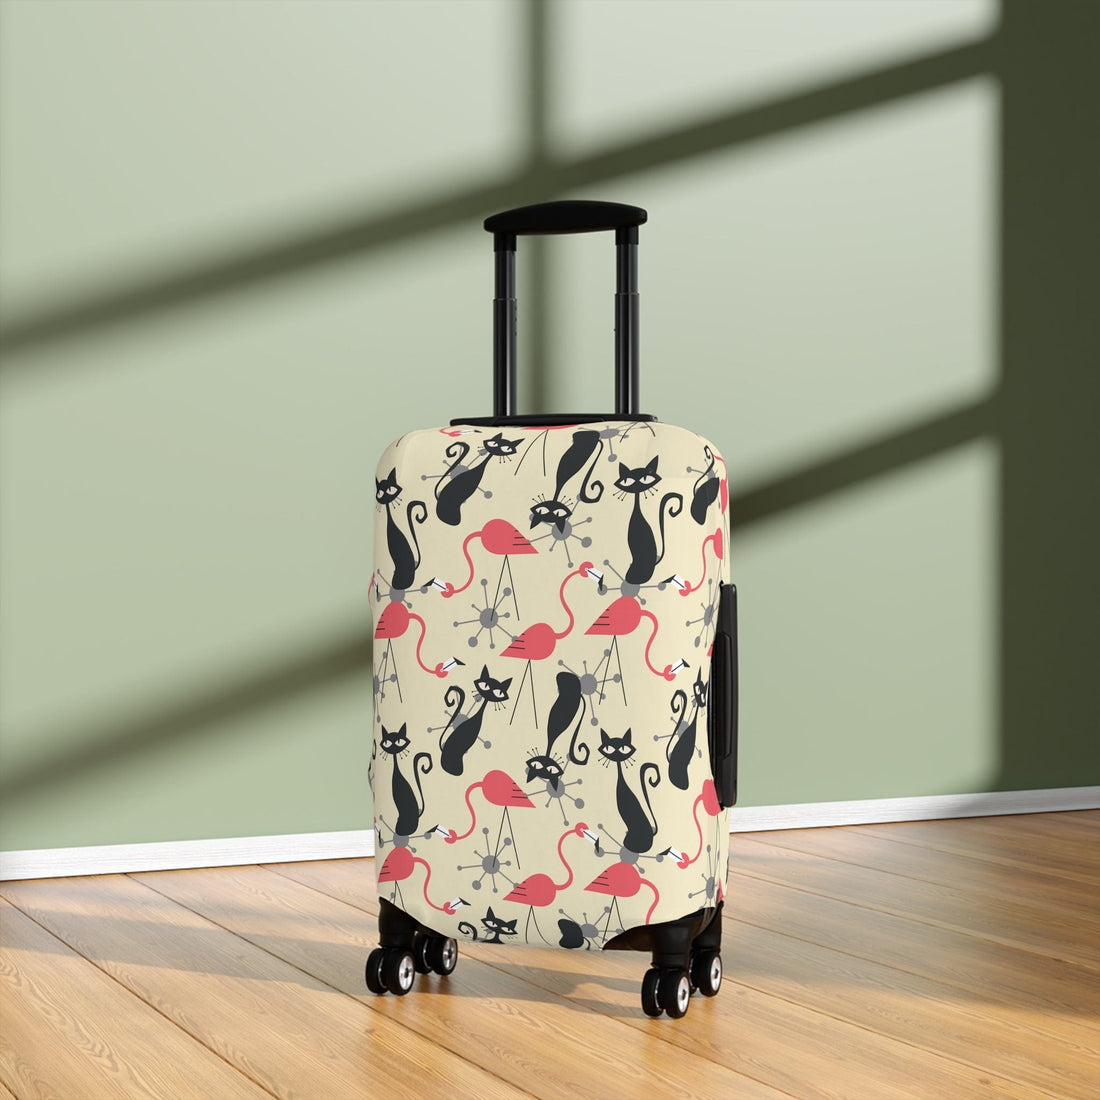 Kate McEnroe New York Atomic Cat, Flamingo Mid Century Modern Luggage Cover, Retro Whimsy MCM Starburst Cream, Pink, Gray Suitcase ProtectorLuggage Covers20779985852758383803